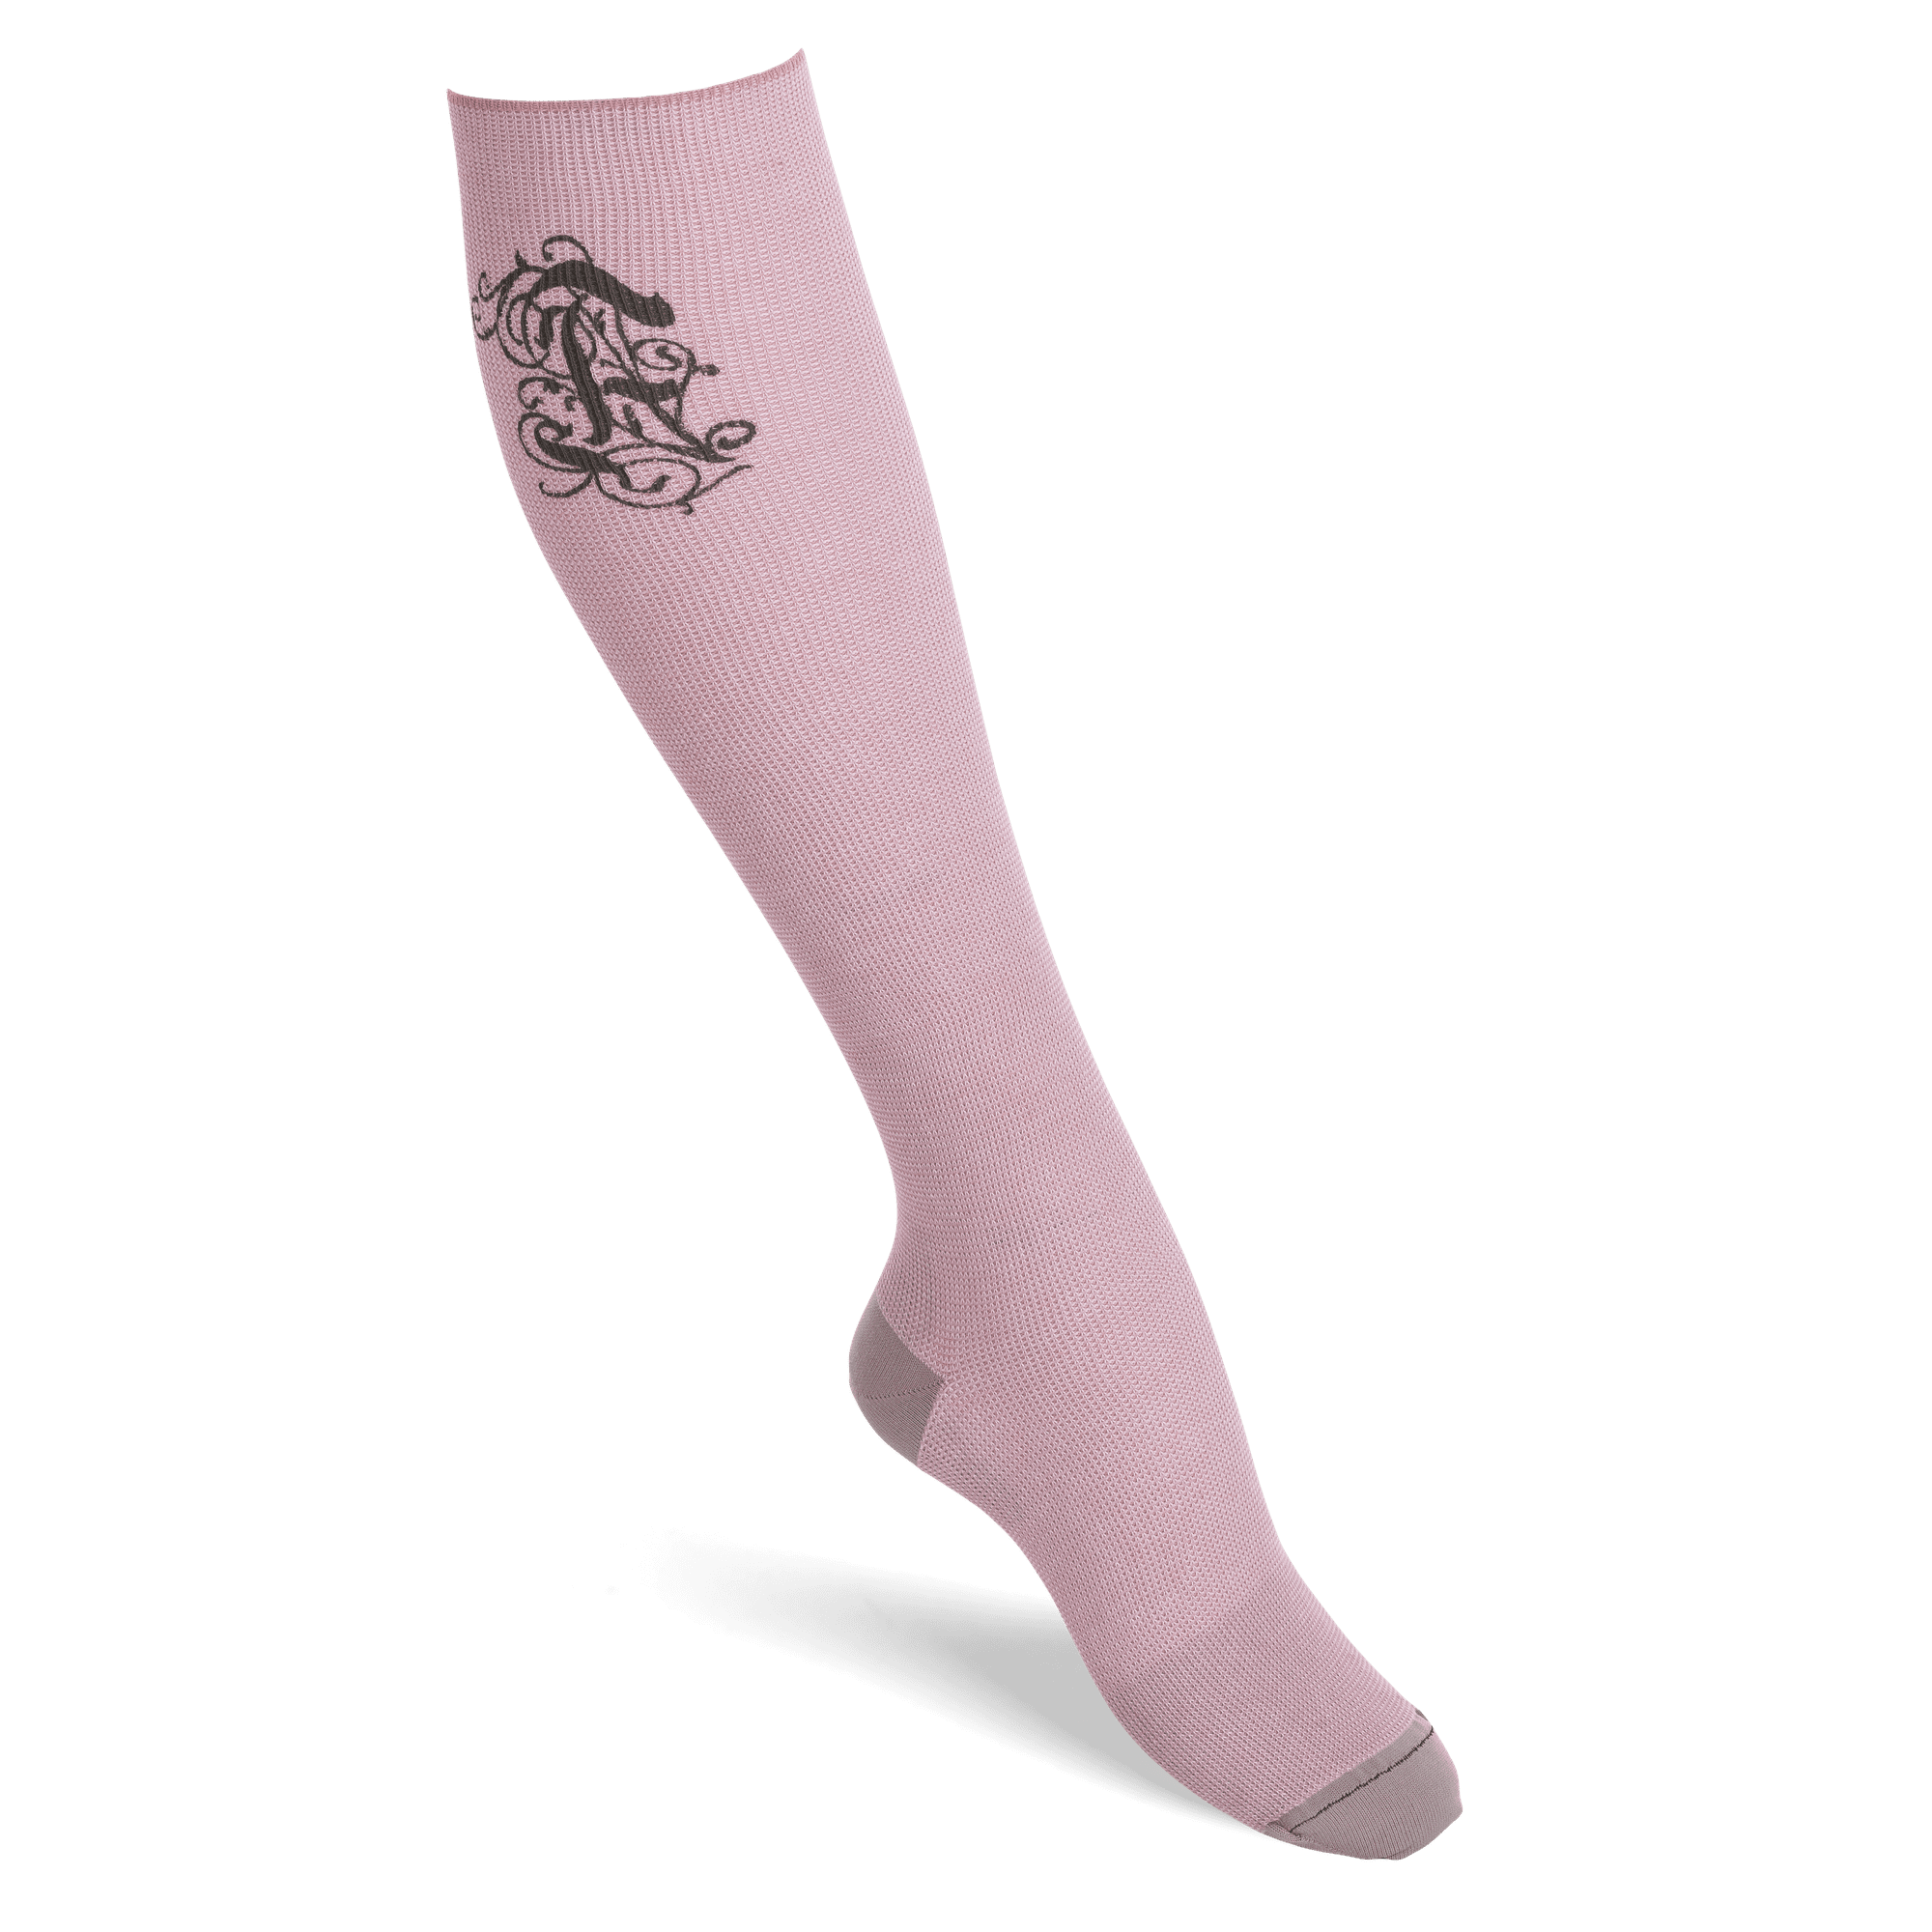 ORIGINAL SUPPORT SOCKS - Powdery Pink